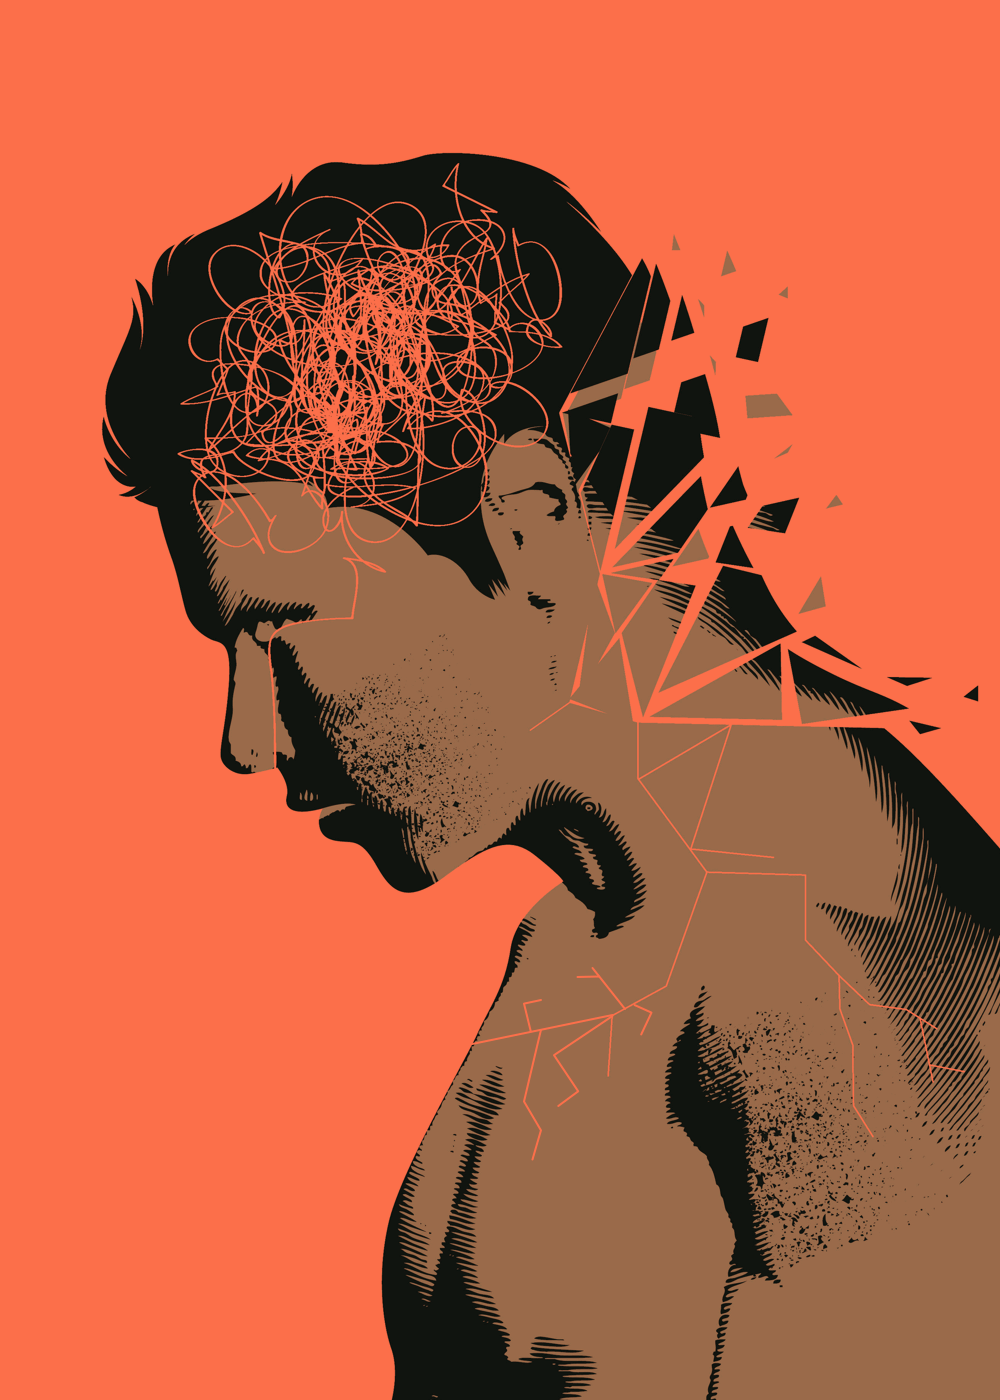 Man with a broken heart illustration